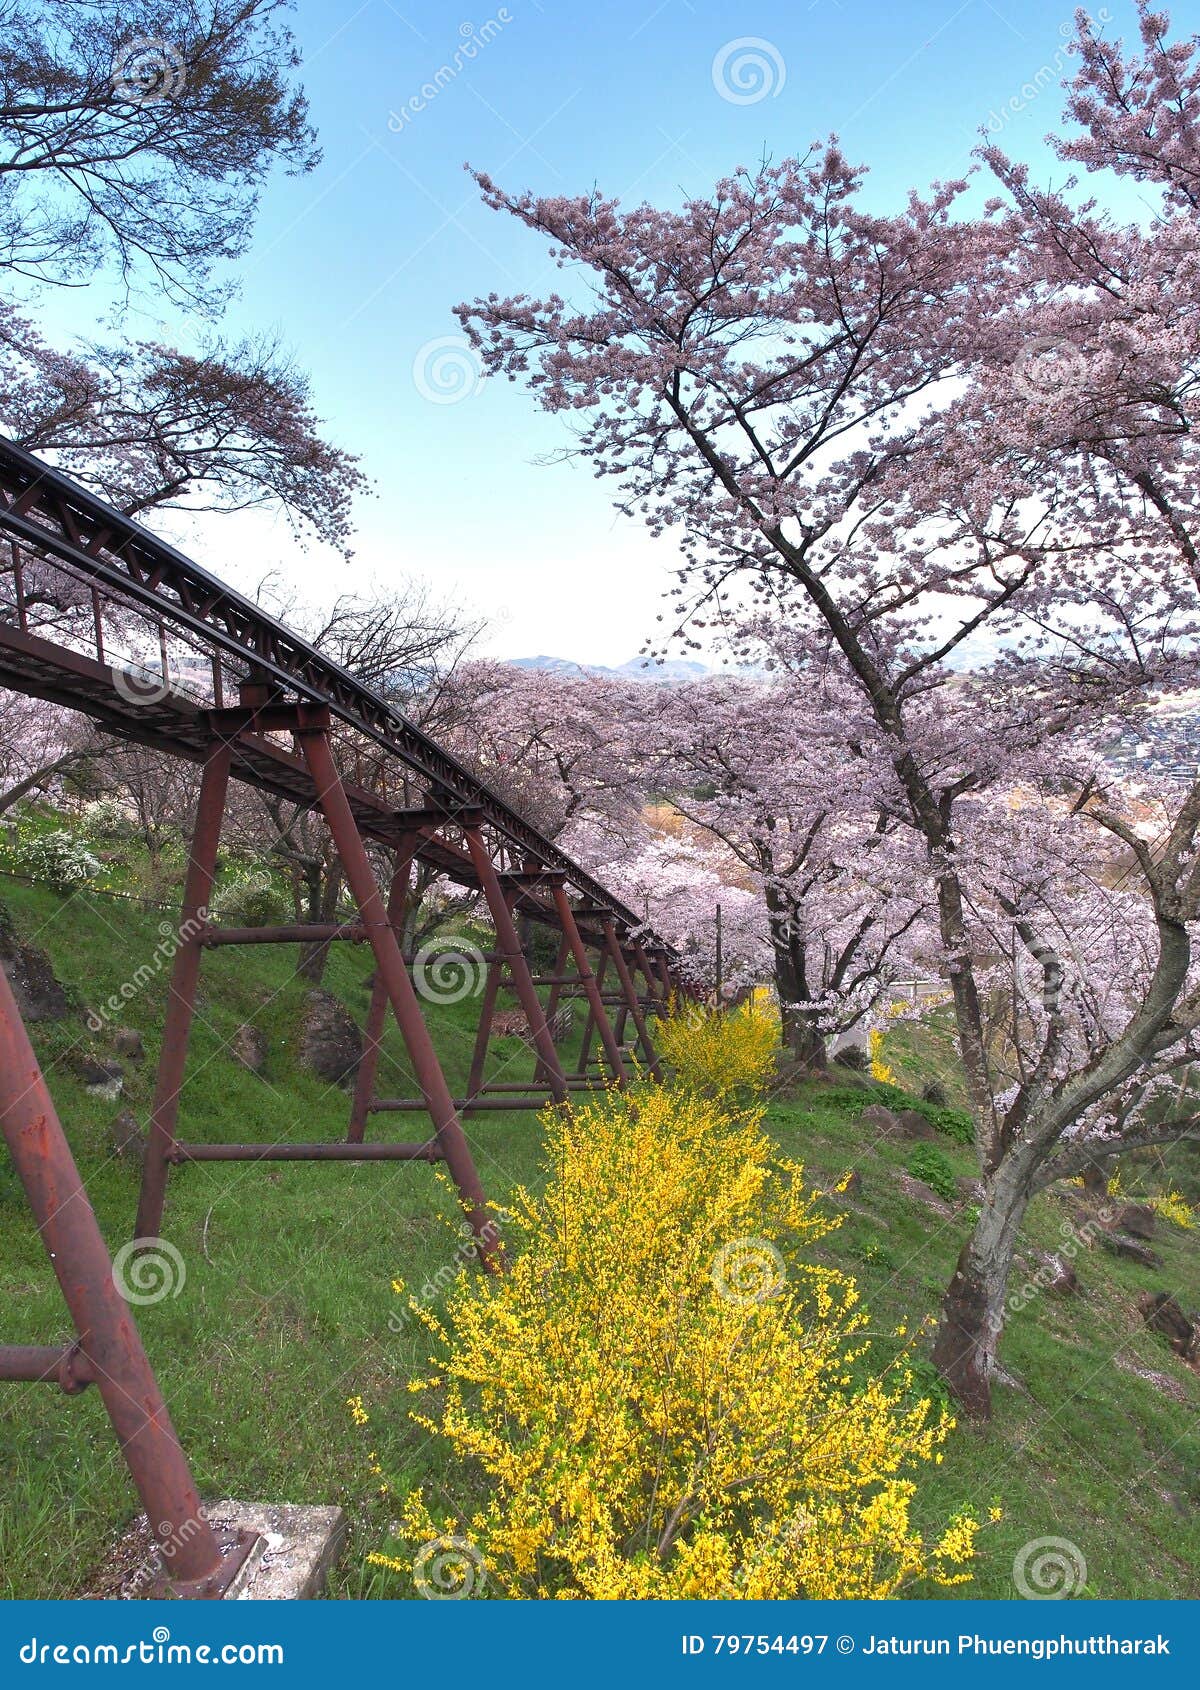 cherry blossom in funaoka joshi park in miyagi prefecture, japan